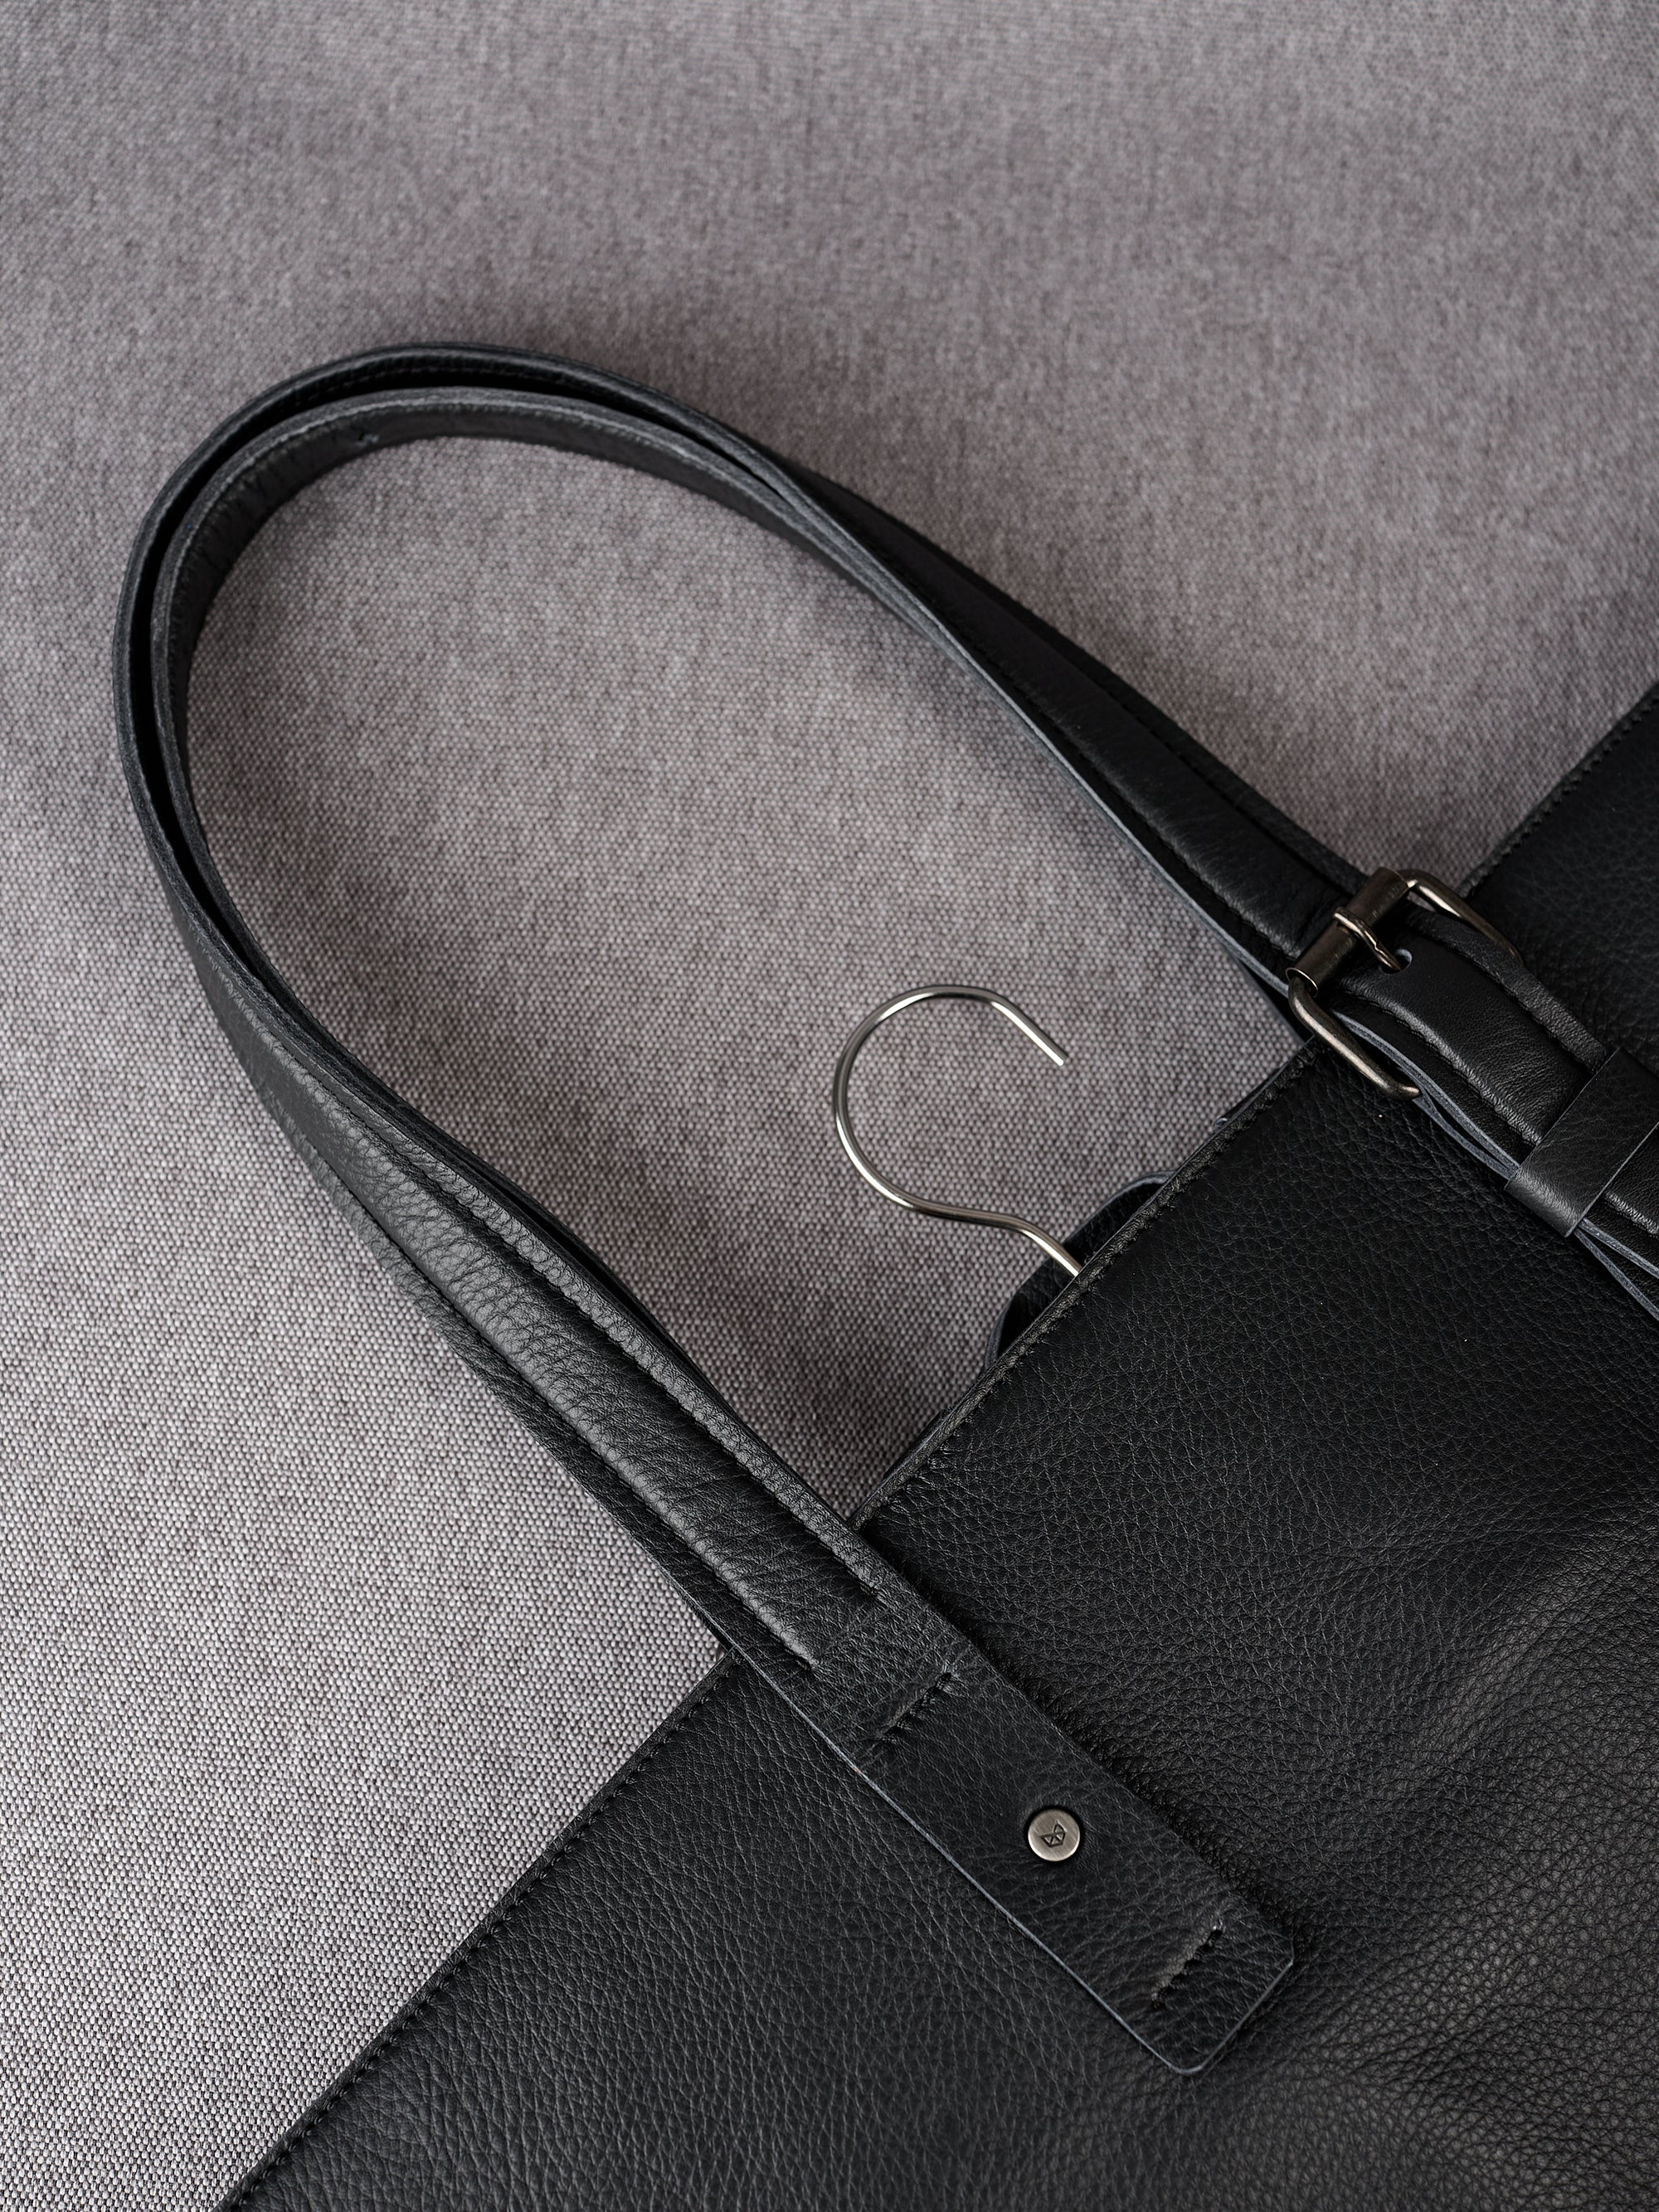 Leather Handles. Best Garment Bag Black by Capra